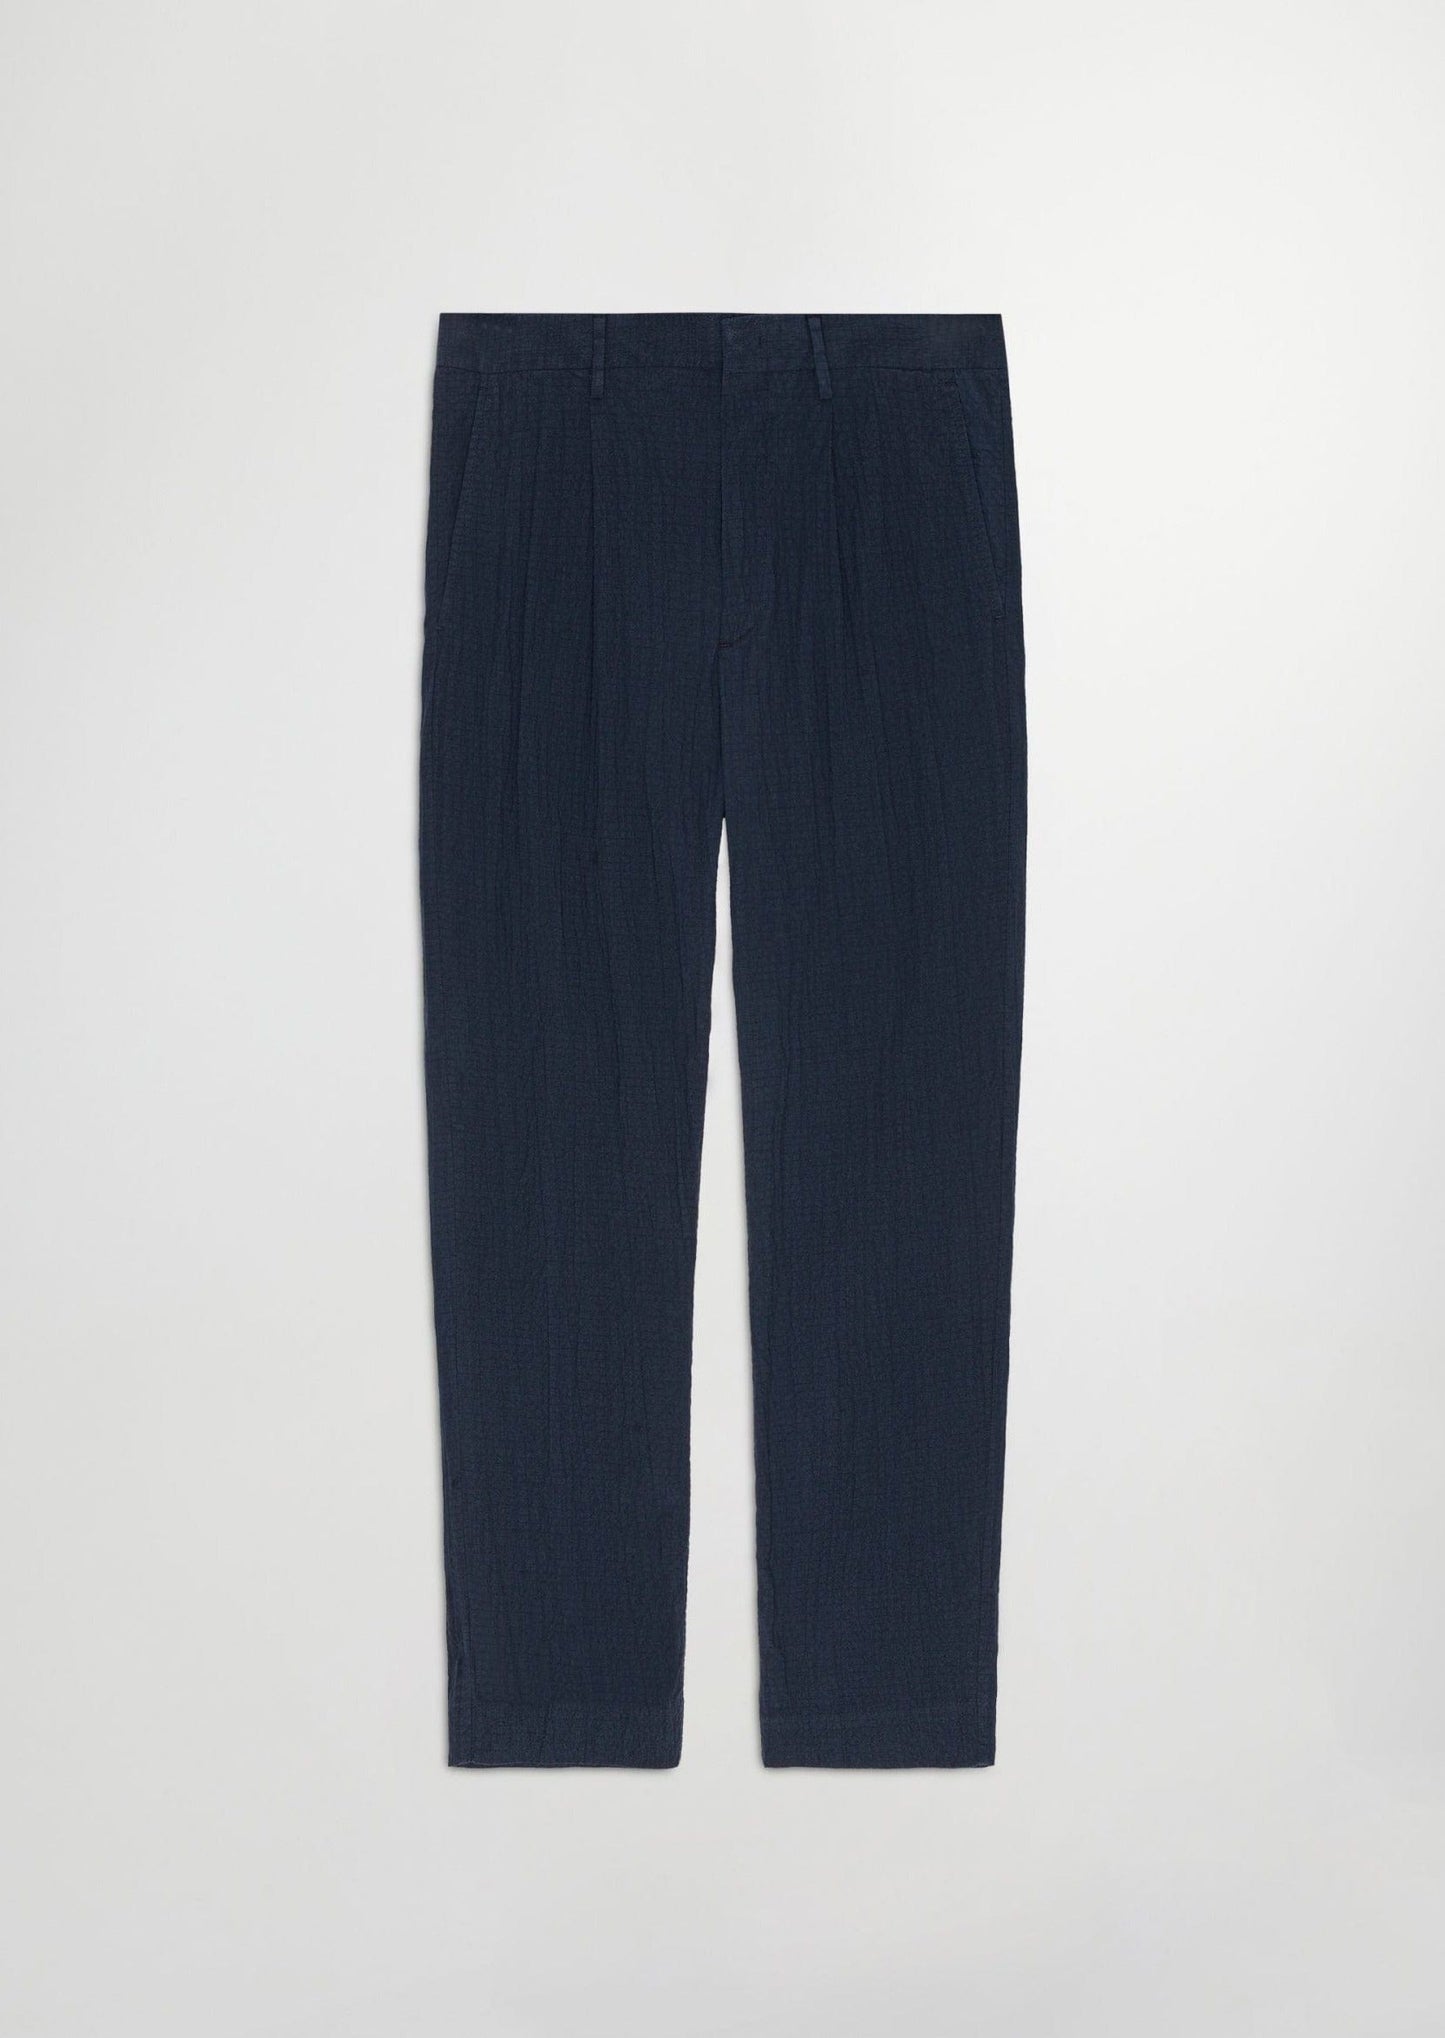 NN07 Pantalons Navy Blue / W29 / L32 Pantalon NN07 - Bill 5721 Seersucker Trouser